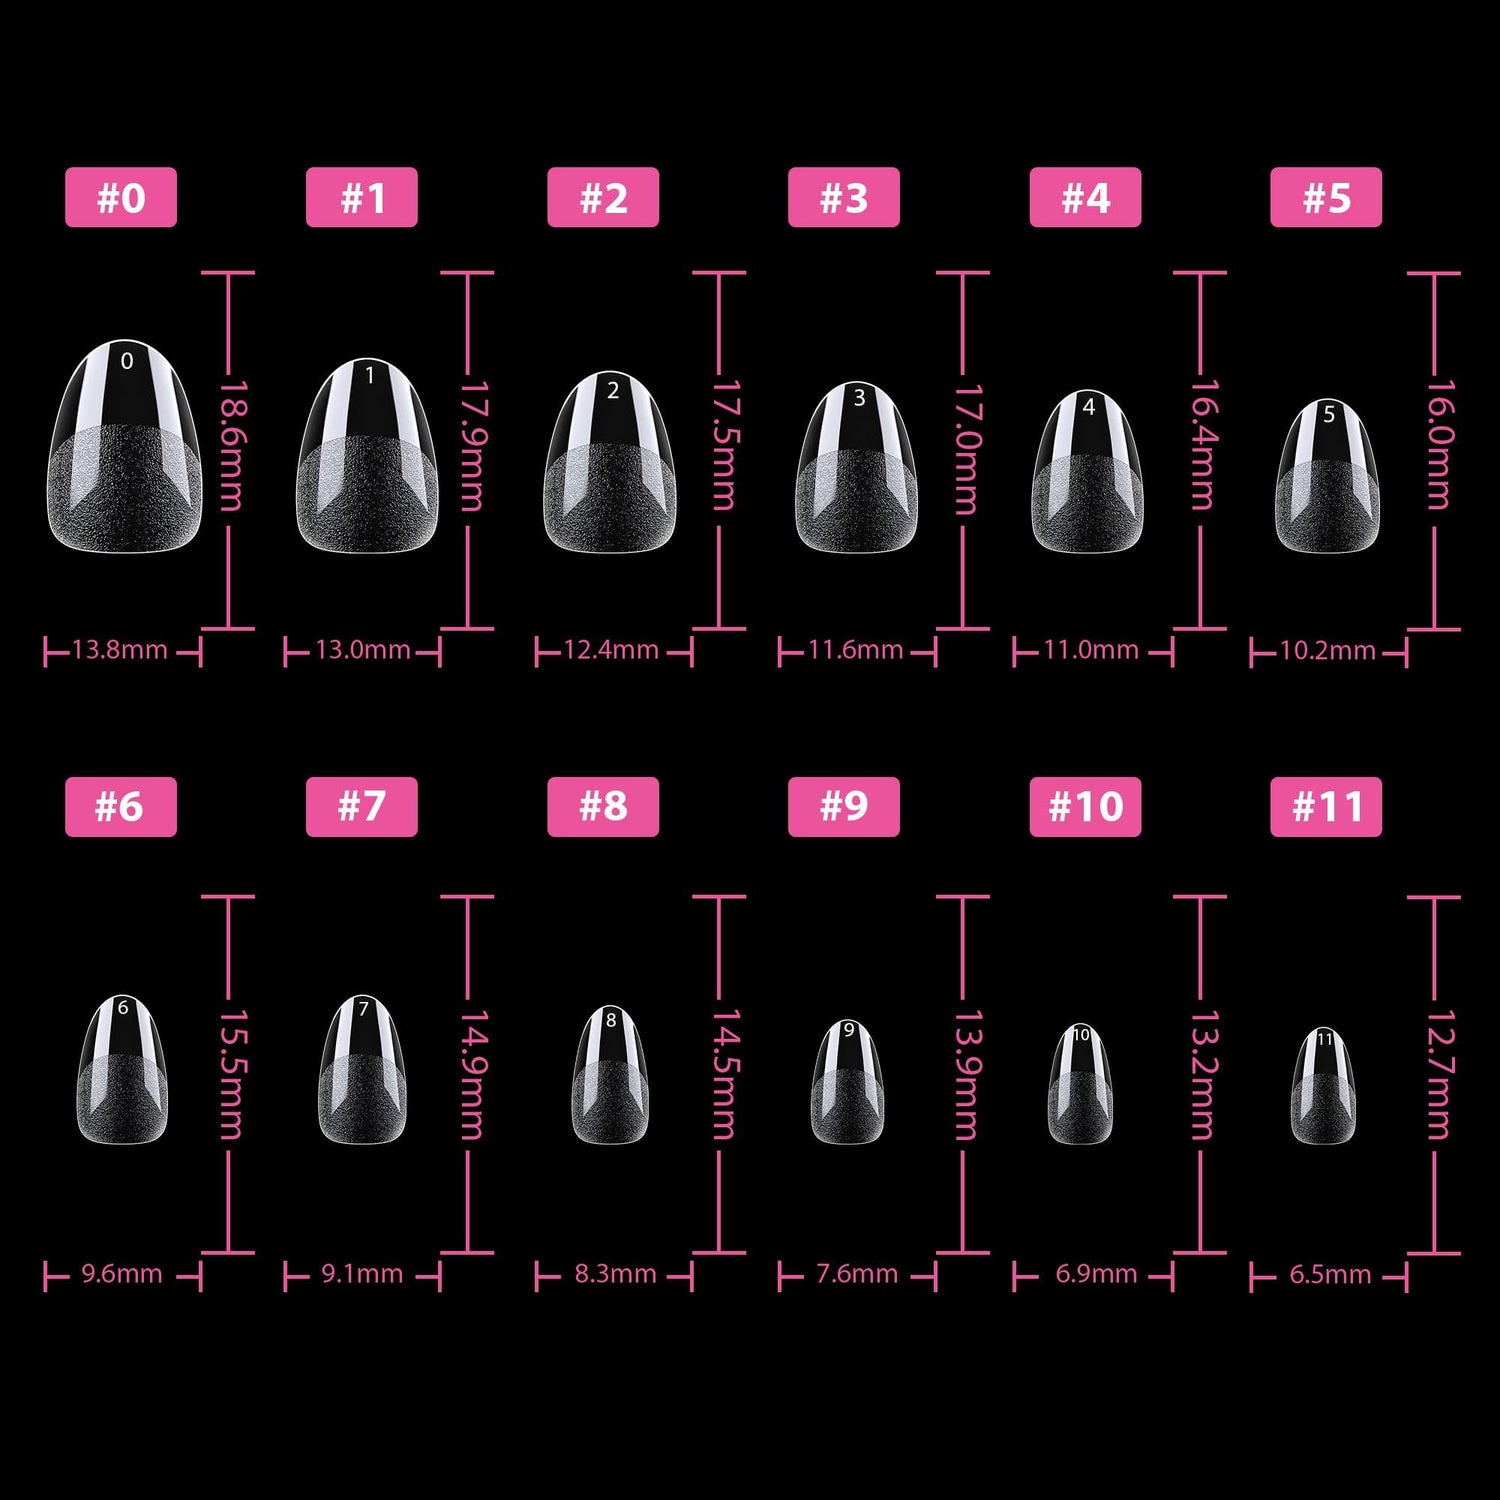 Toe Nail Tips 216Pcs Short Square False Soft Gel Full Cover Fake Toe Nails Matte Toe Nails 12 Sizes Pre-shape Fake Toenails Gel X Toe Nail Tips For Nail Extension Home DIY Nail Salon - Nails Creations